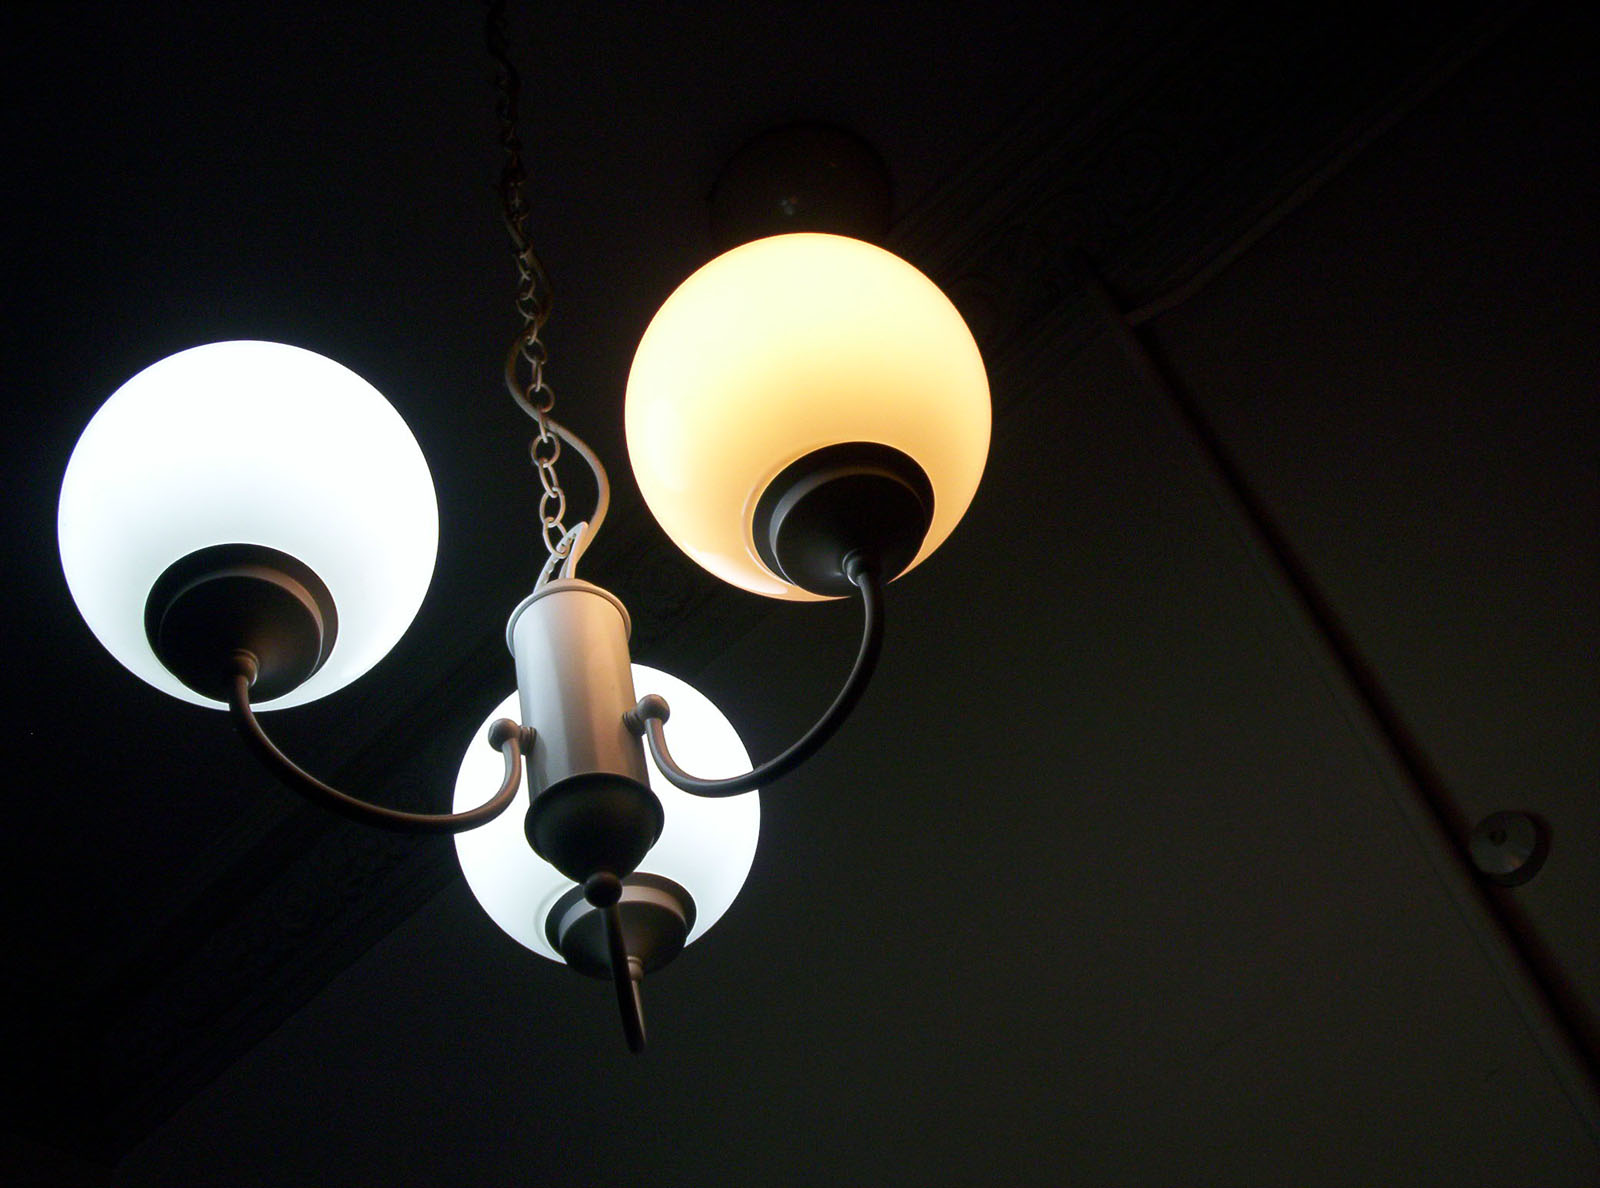 Art Nouveau Period Lighting, Applied, Illuminate, Three, Sciences, HQ Photo